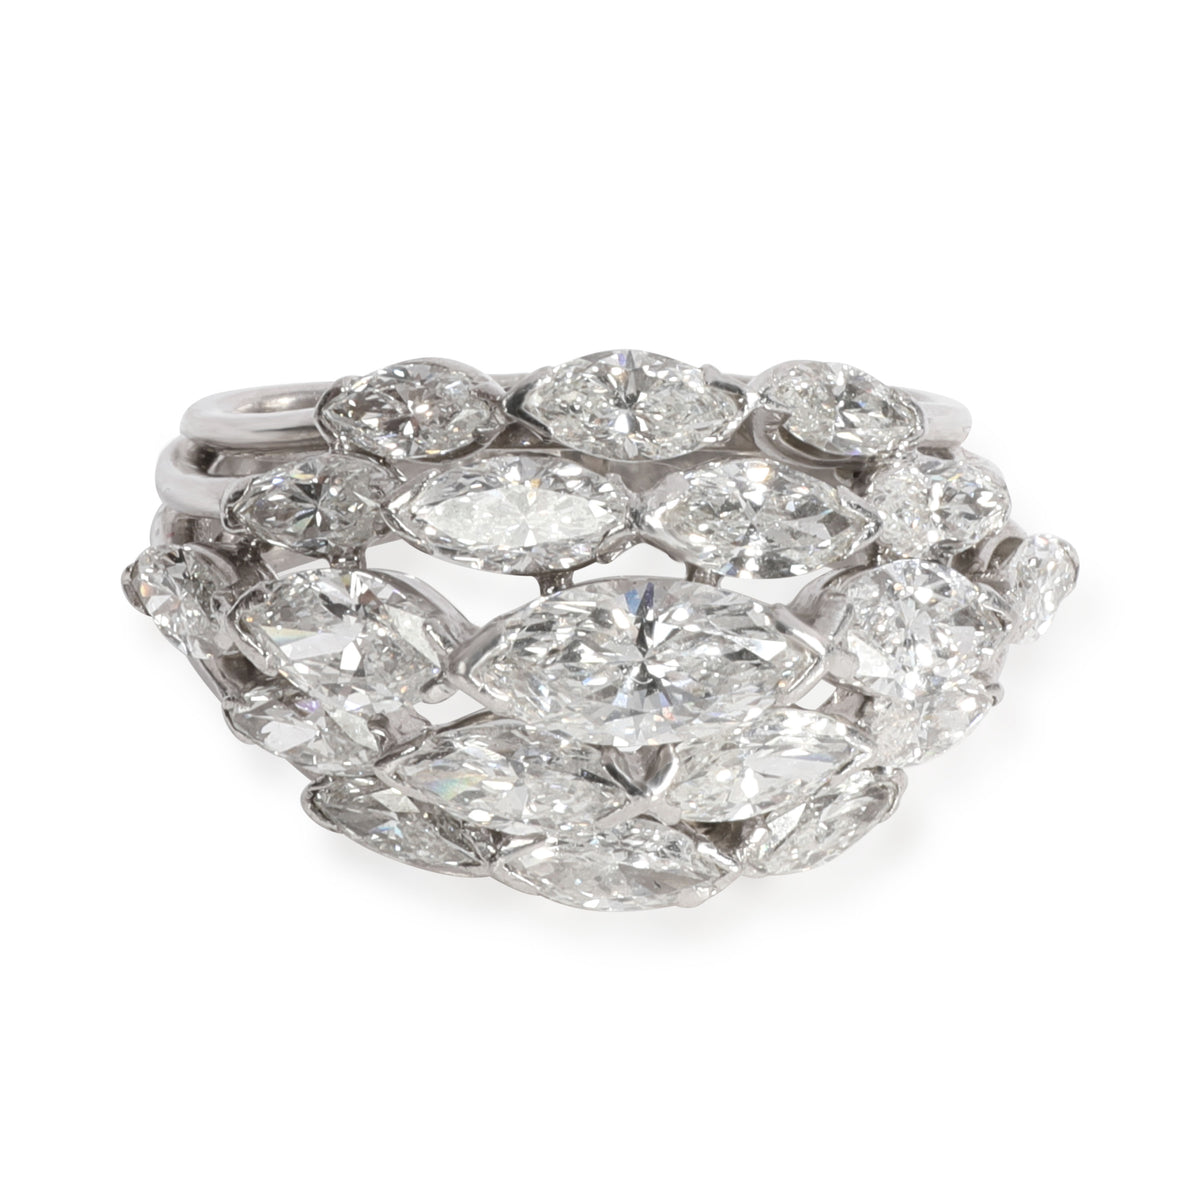 Hammerman Bro Vintage Marquise Diamond Ring in Platinum 4.55 CTW